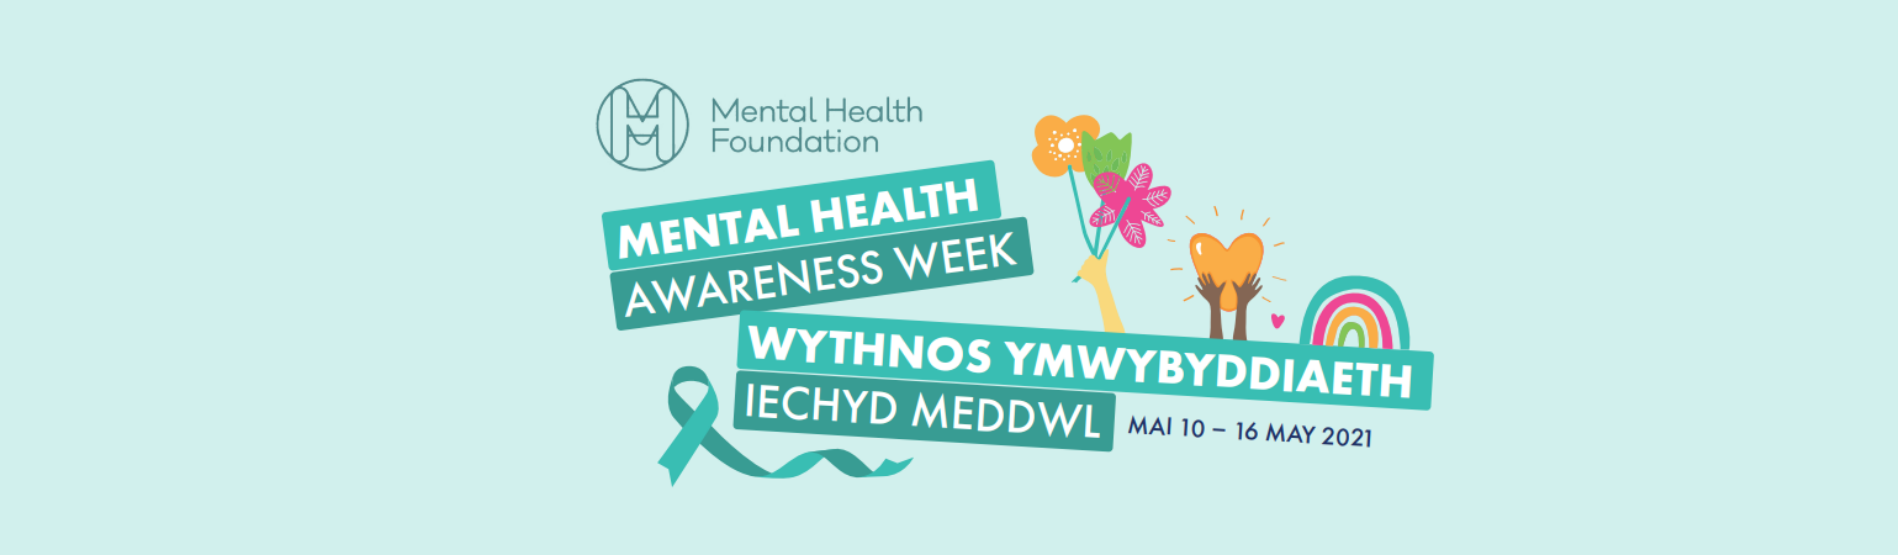 mental health awareness week banner in pain blue